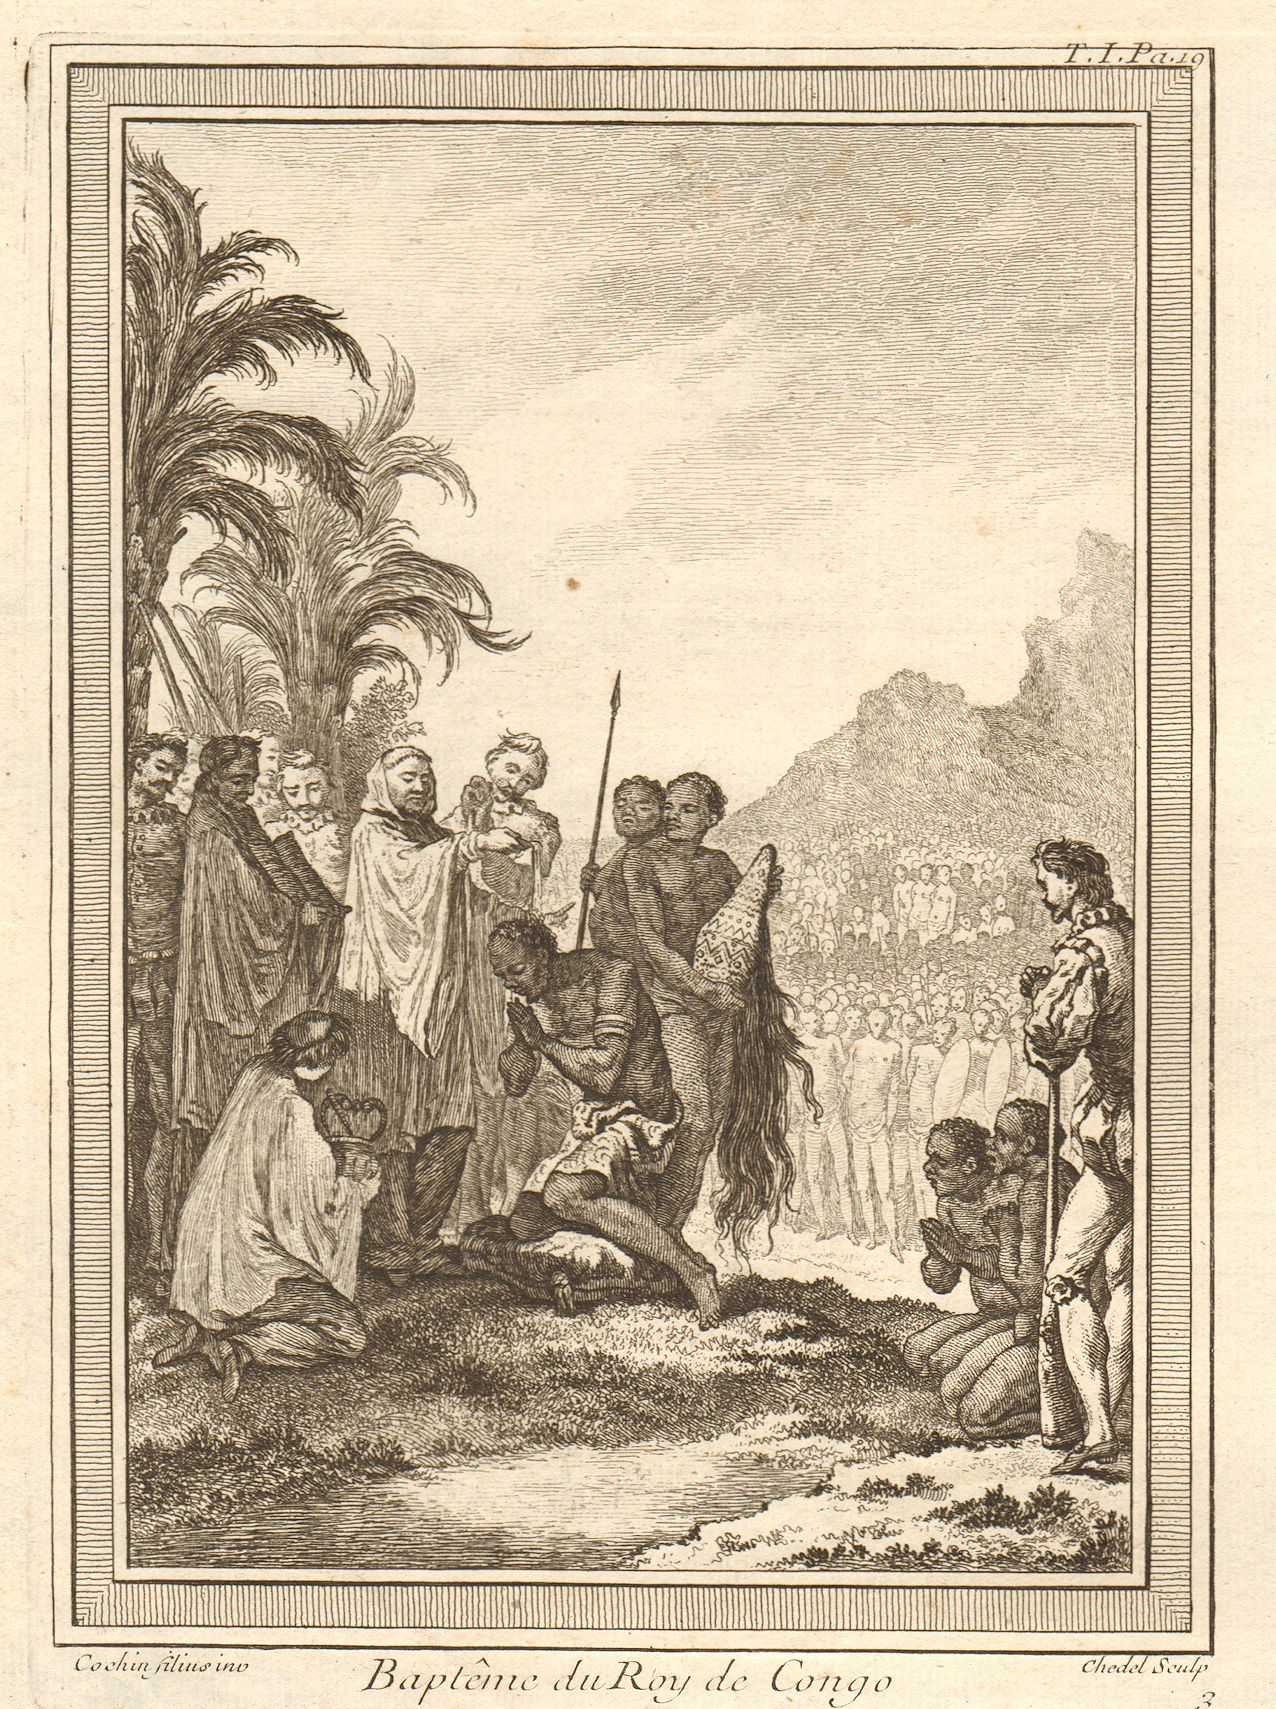 Associate Product 'Baptême du Roy de Congo'. Joao I, King of Kongo baptism 1491. Nkuwu Nzinga 1746